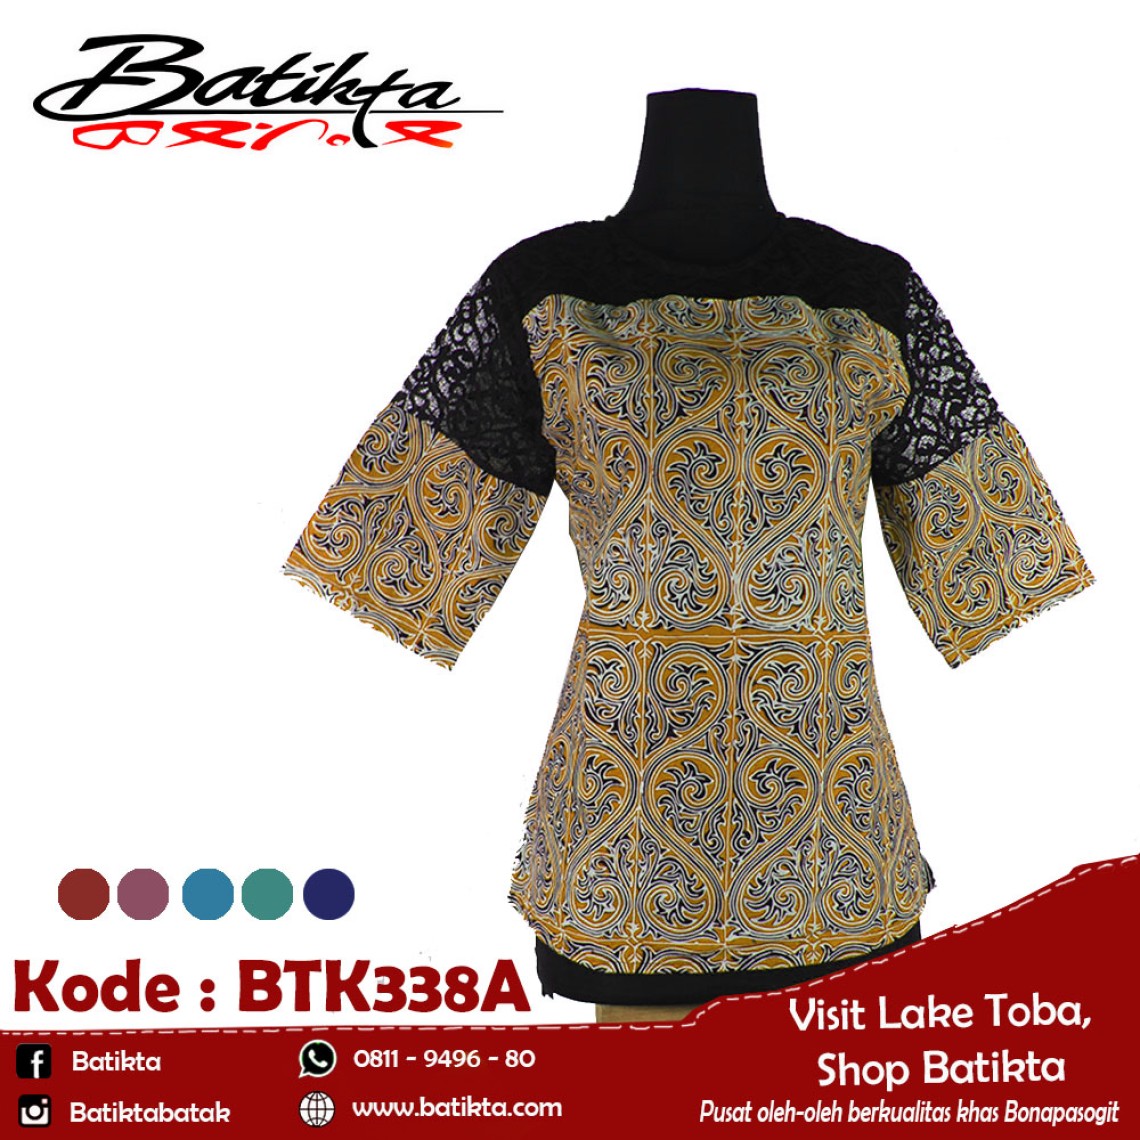 BTK338A Blus Batik Motif Gorga Warna Coklat Putih Hitam profile picture